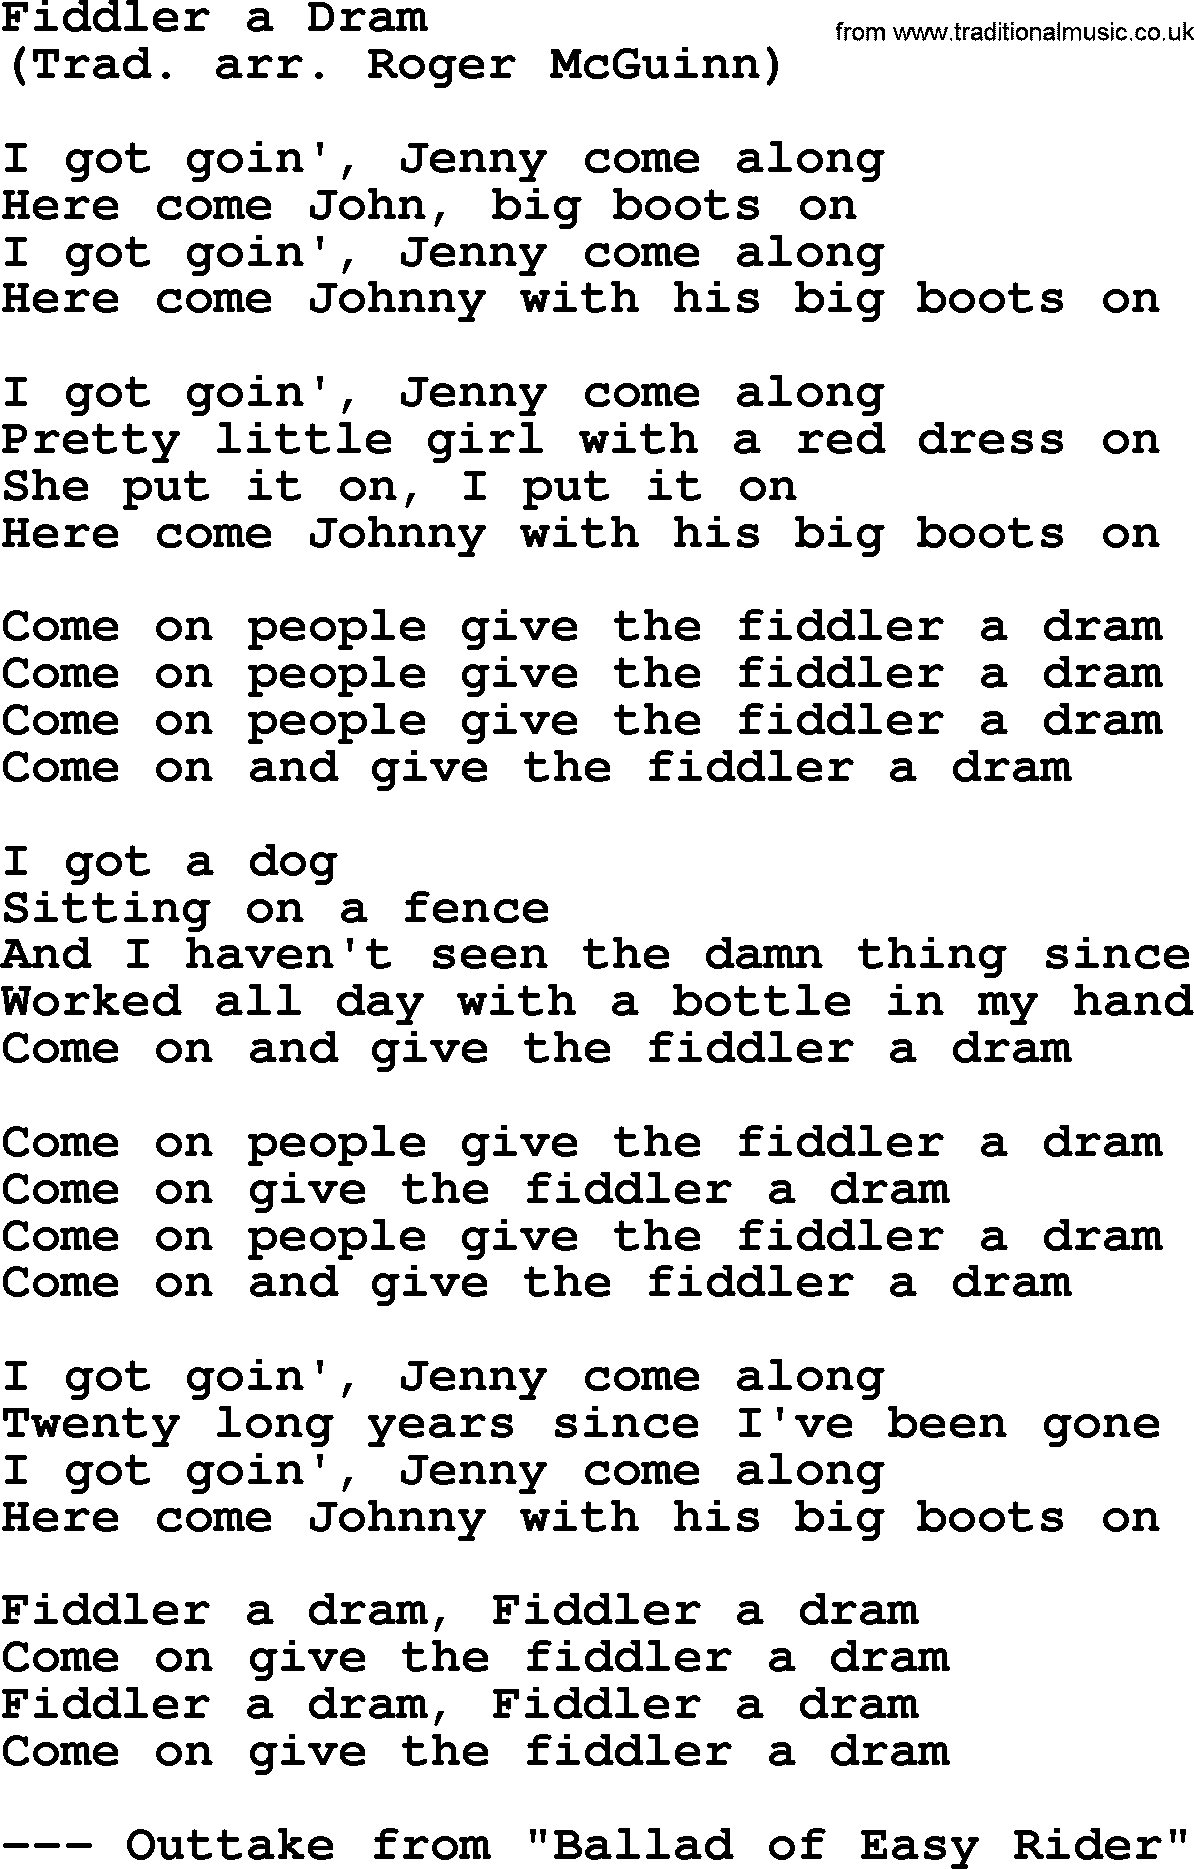 The Byrds song Fiddler A Dram, lyrics